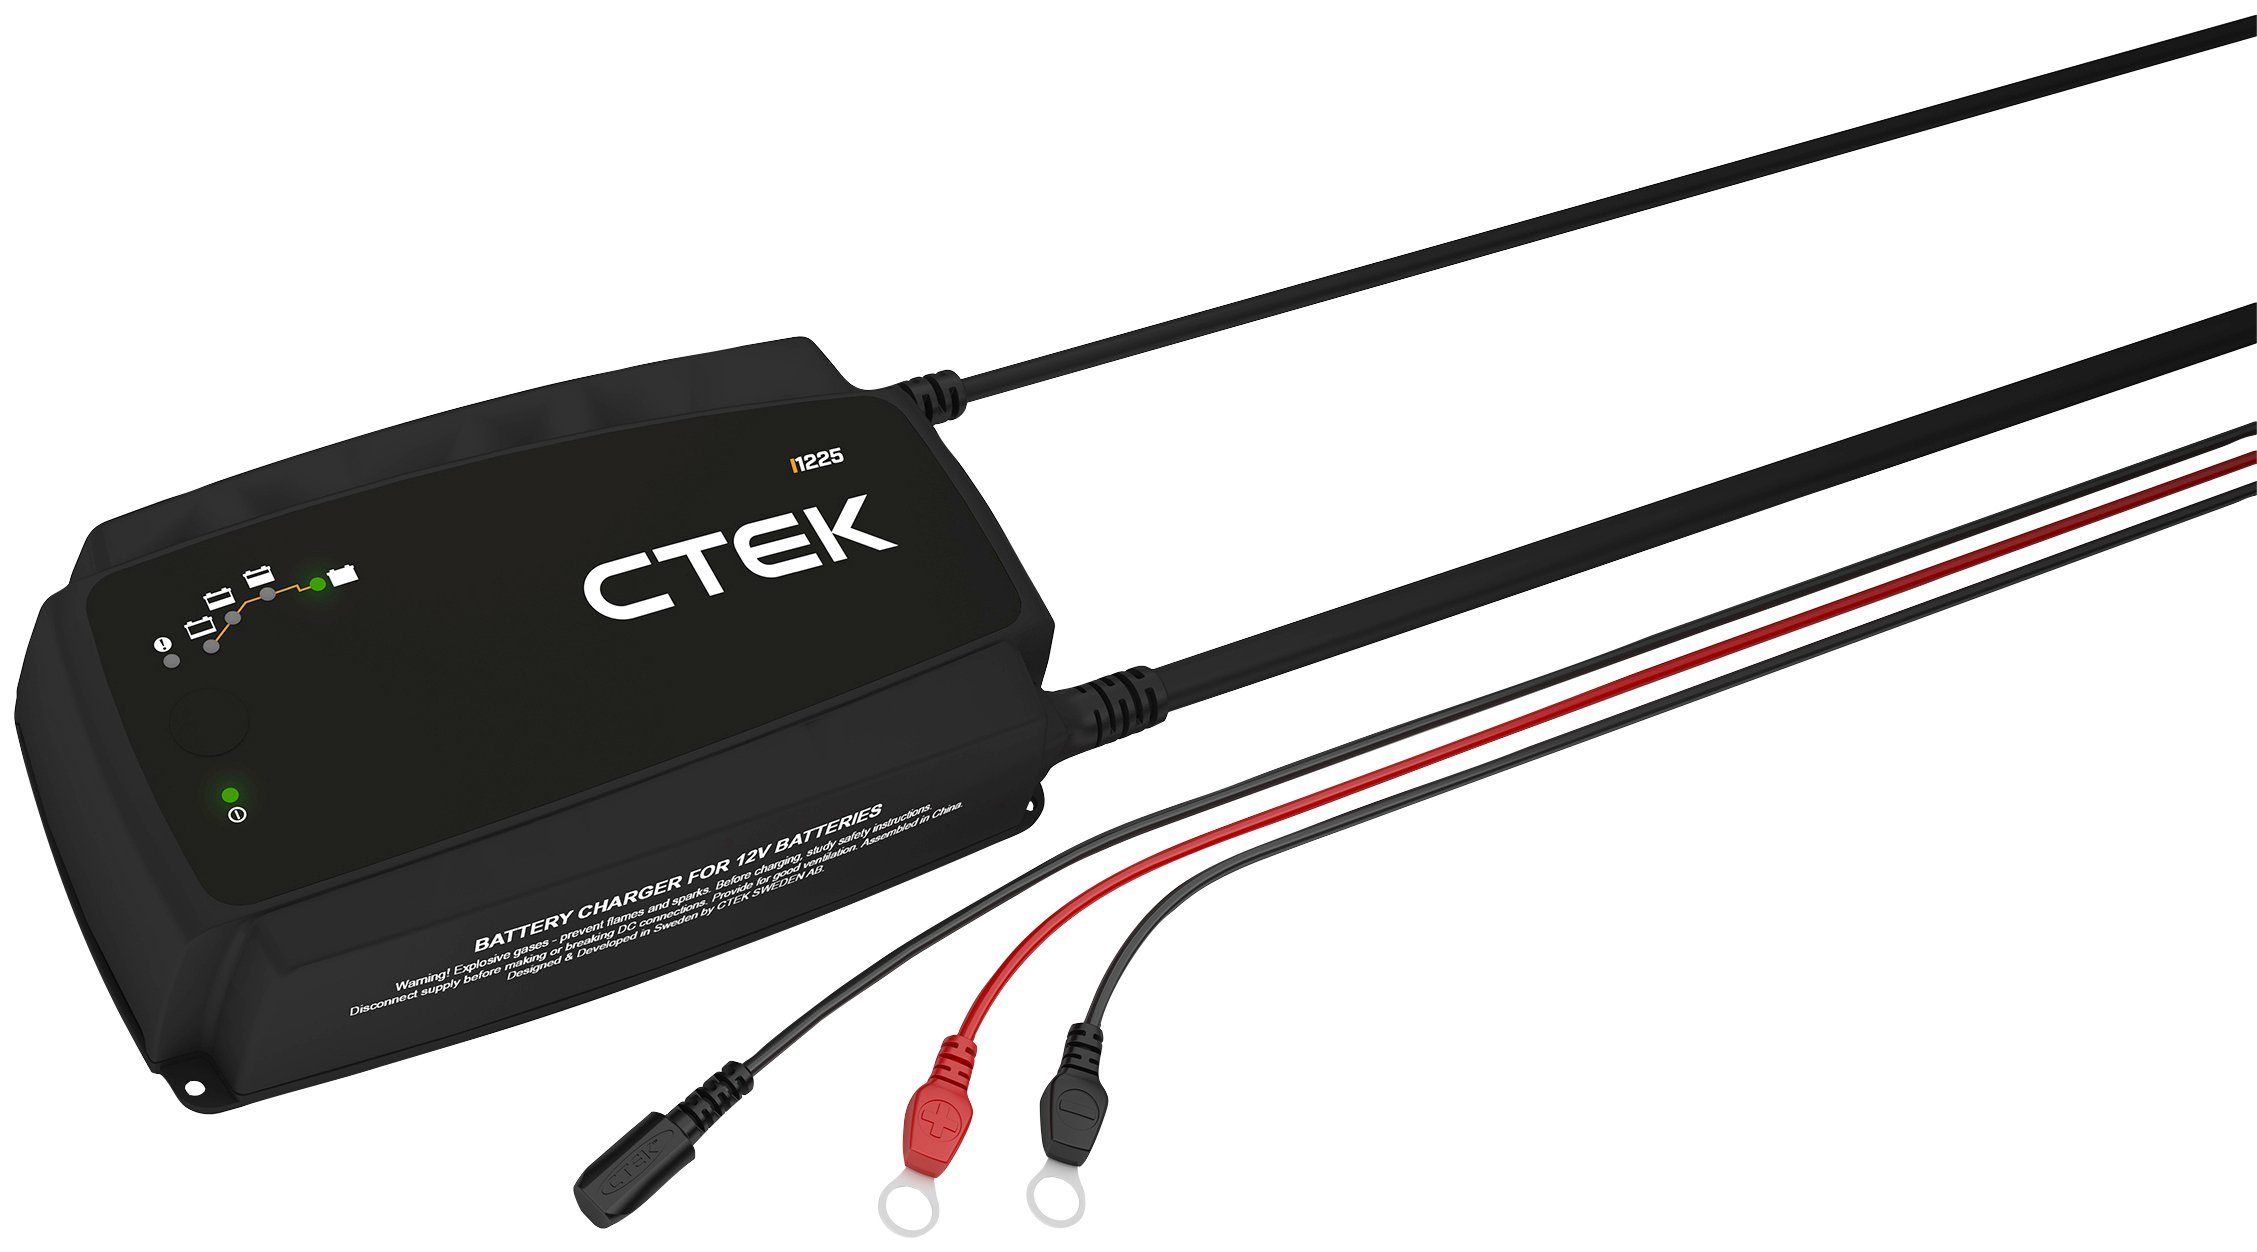 CTEK I1225 Batterie-Ladegerät (Temperatursensor zur Optimierung des  Ladevorgangs in kalten Umgebungen)